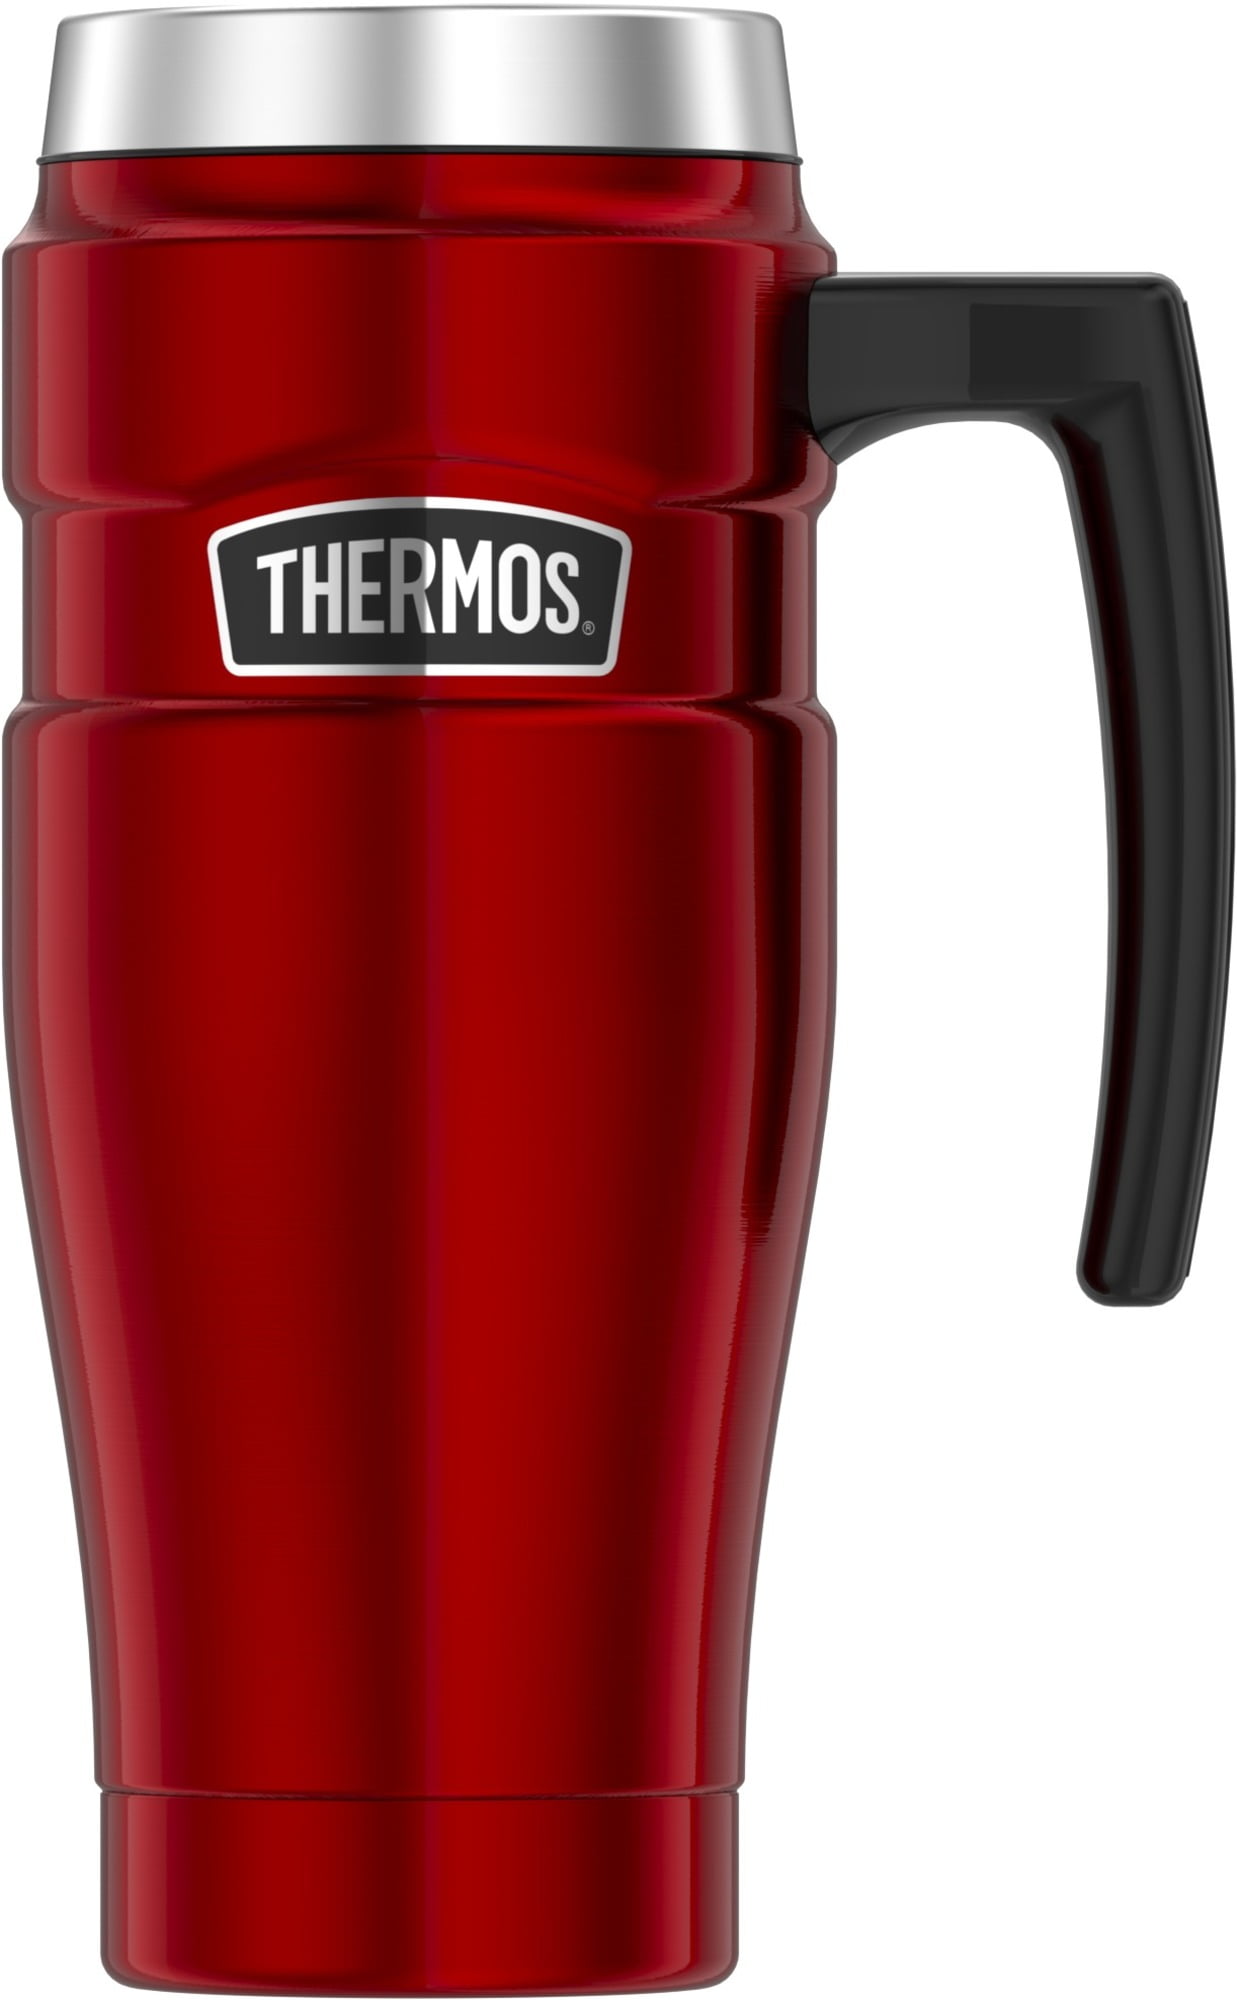 thermos king travel mug review